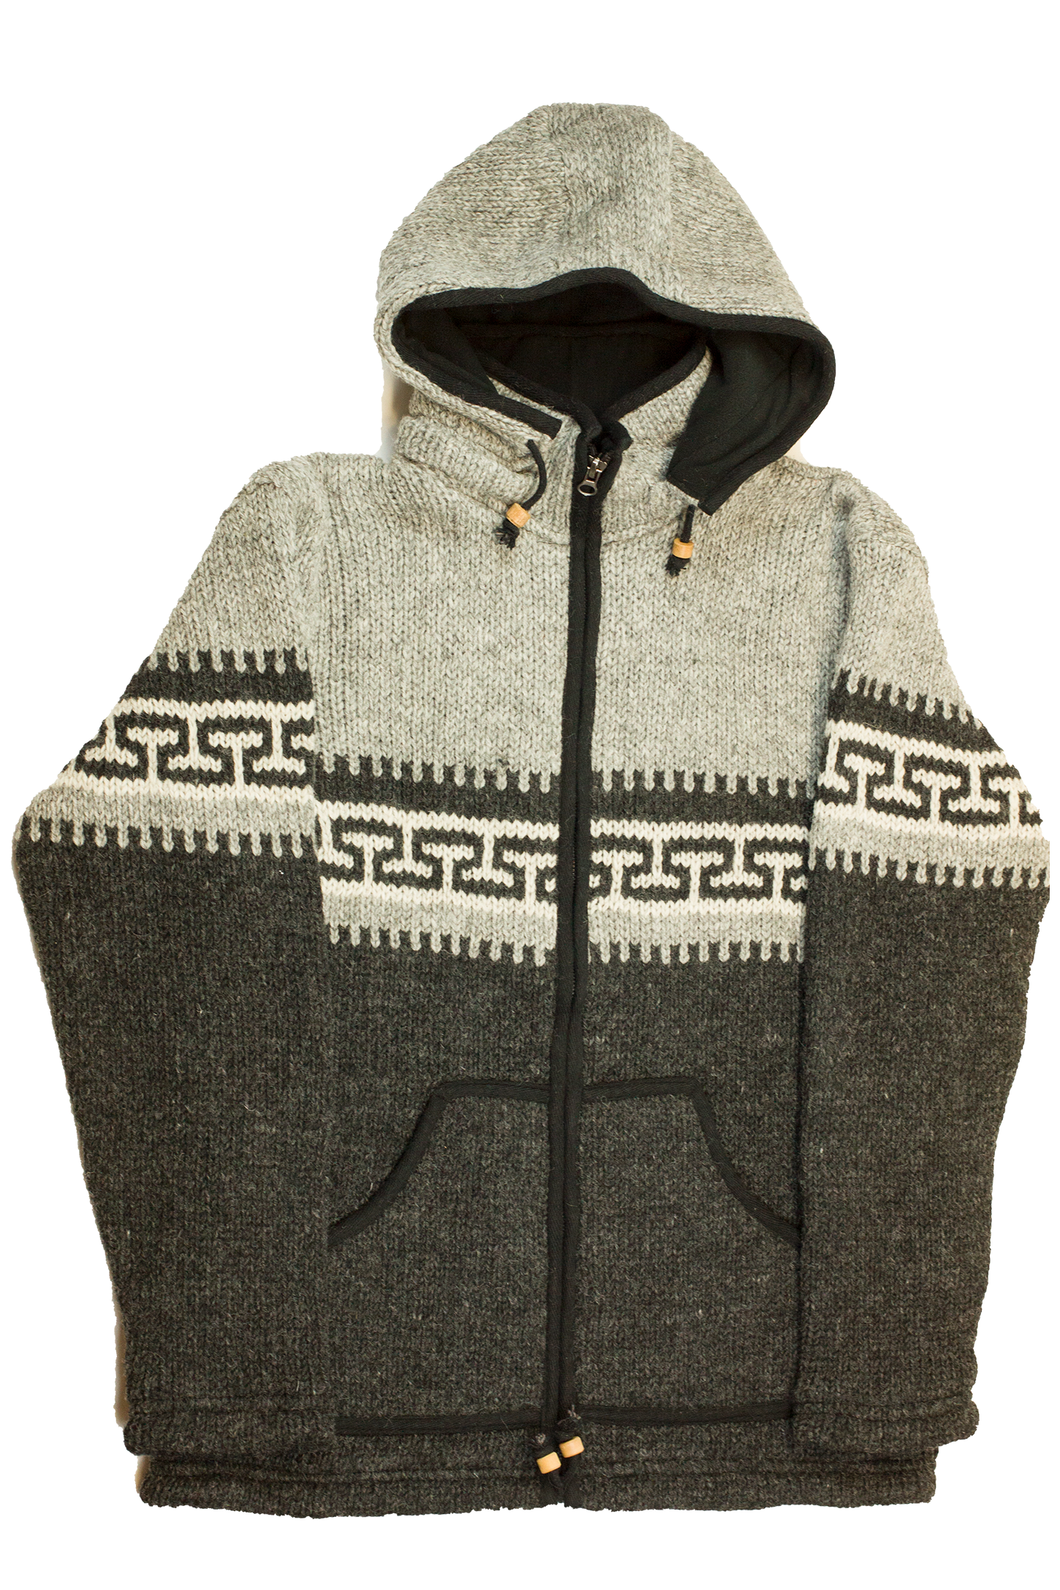 Hand knitted woolen jacket/sweater with soft inner fleece - HMPWJ17